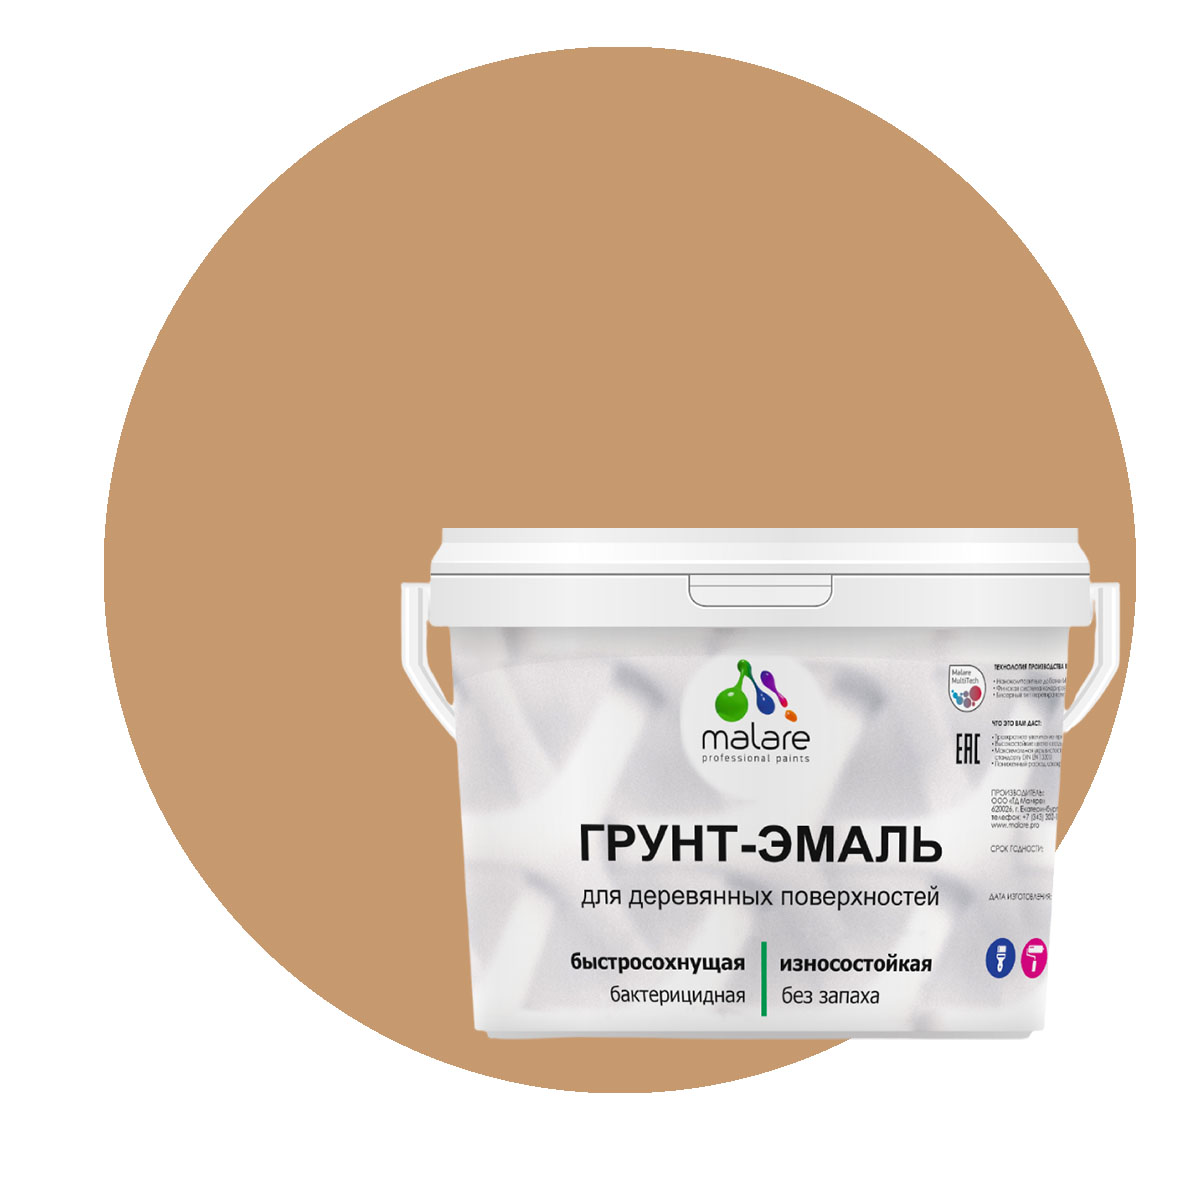 Грунт-Эмаль 3 в 1 Malare для деревянных поверхностей, молочный шоколад, 10 кг. герметик kerakoll silicone color 22 молочный 310мл